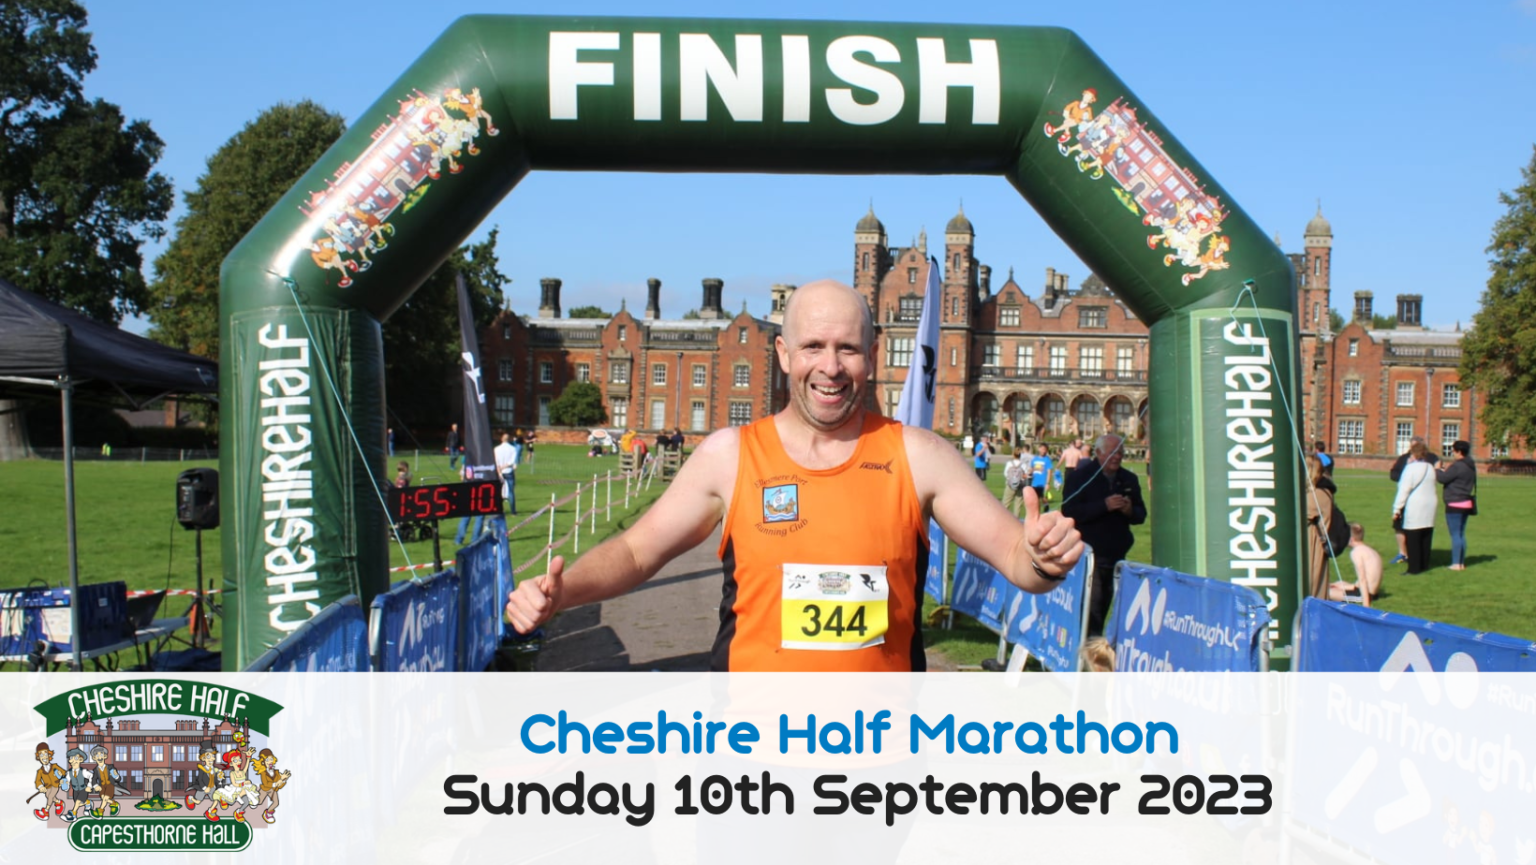 Cheshire Half Marathon 2023 Capesthorne Hall Half Marathon Cheshire